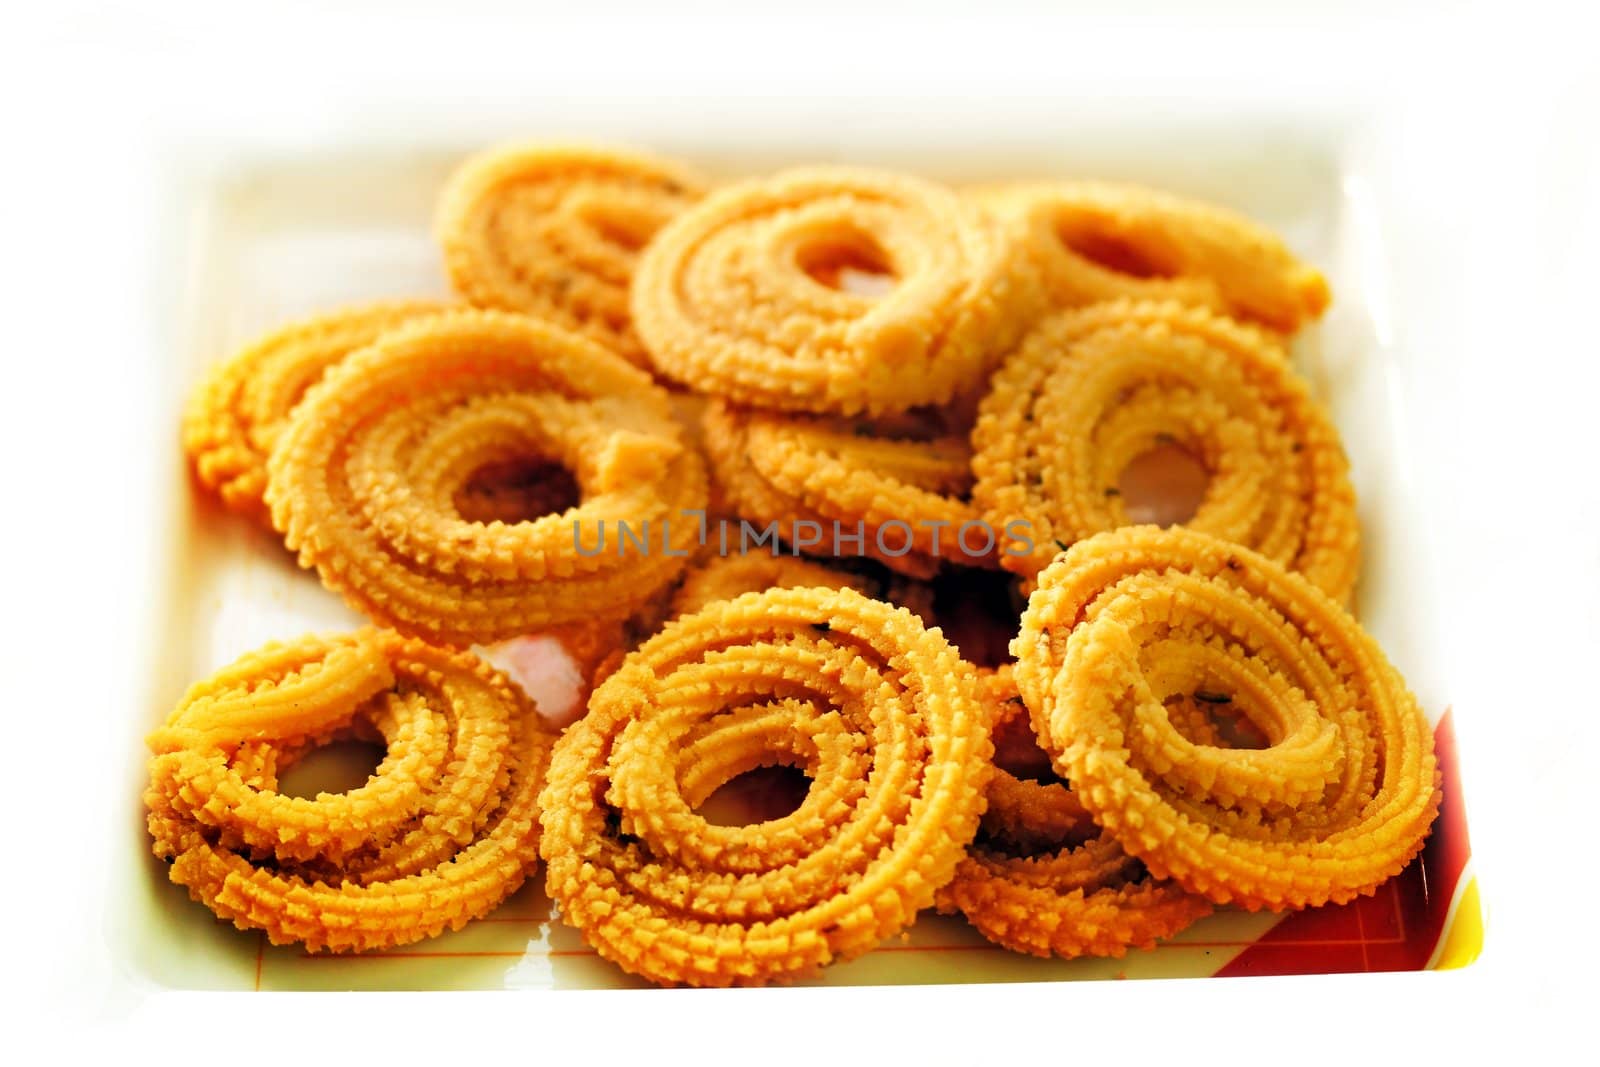 Popular south indian deep fried snack called murukku or muruku.